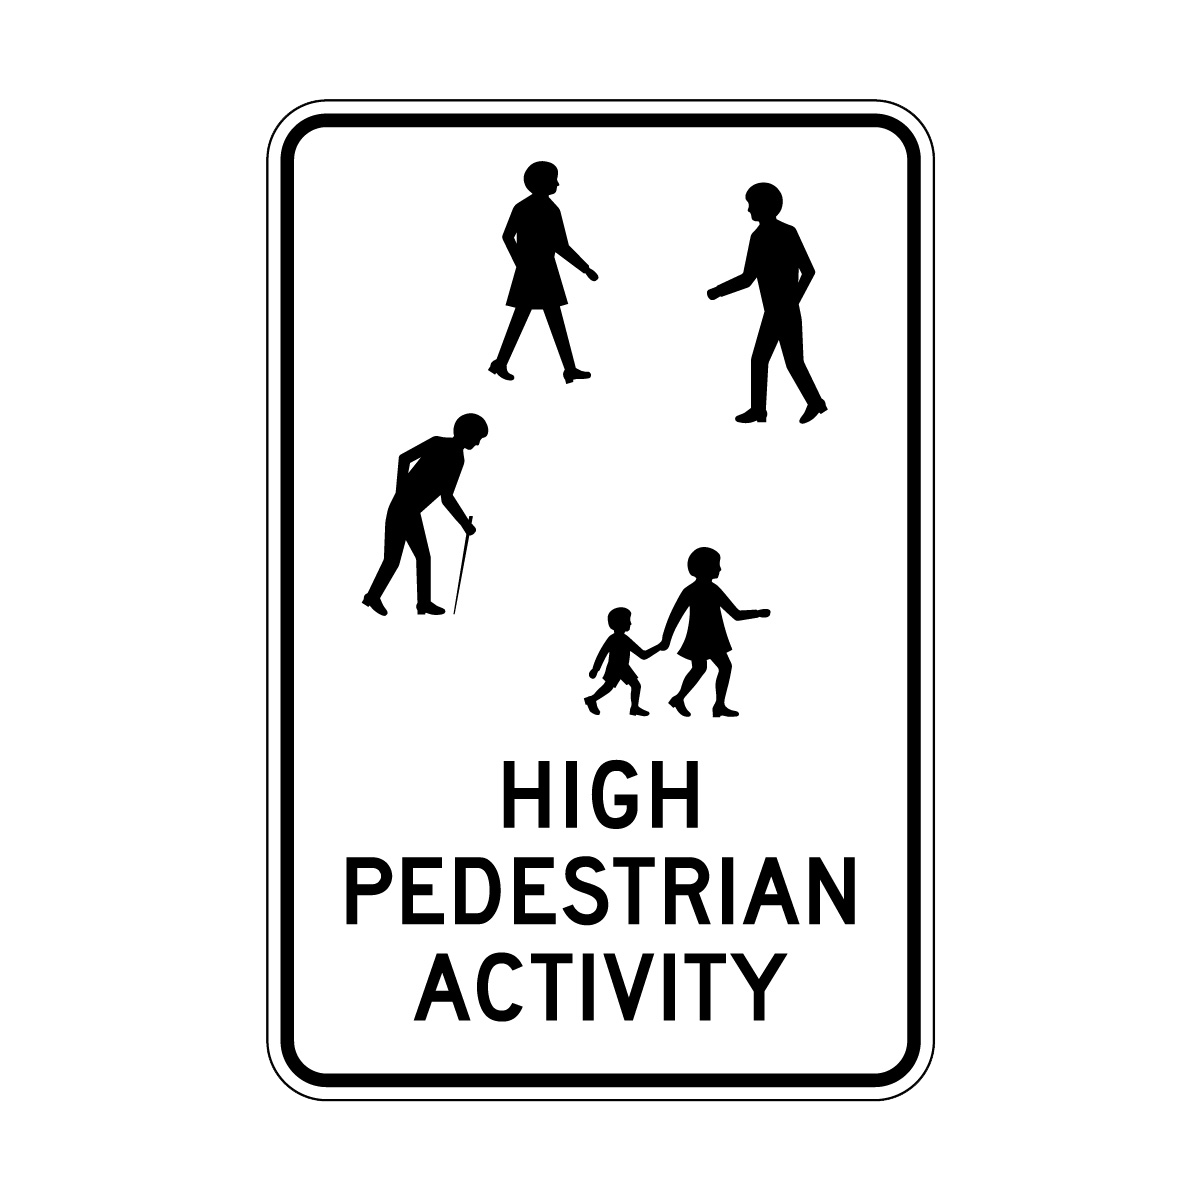 Warning: High Pedestrian Activity Sign